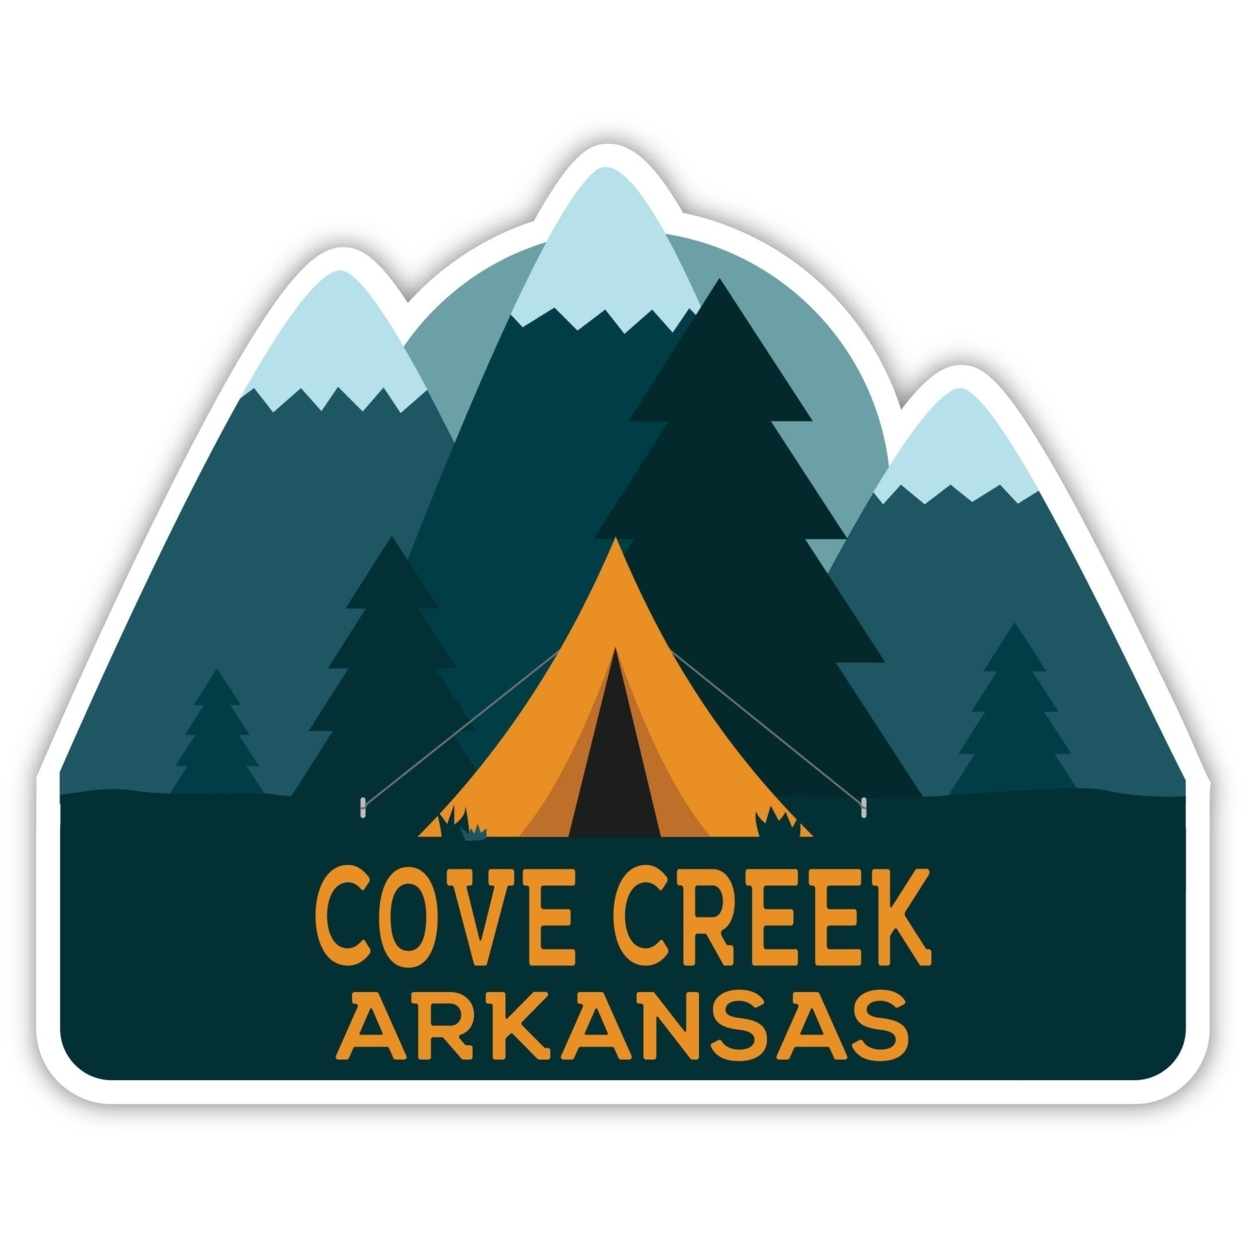 Cove Creek Arkansas Souvenir Decorative Stickers (Choose Theme And Size) - 4-Pack, 12-Inch, Tent